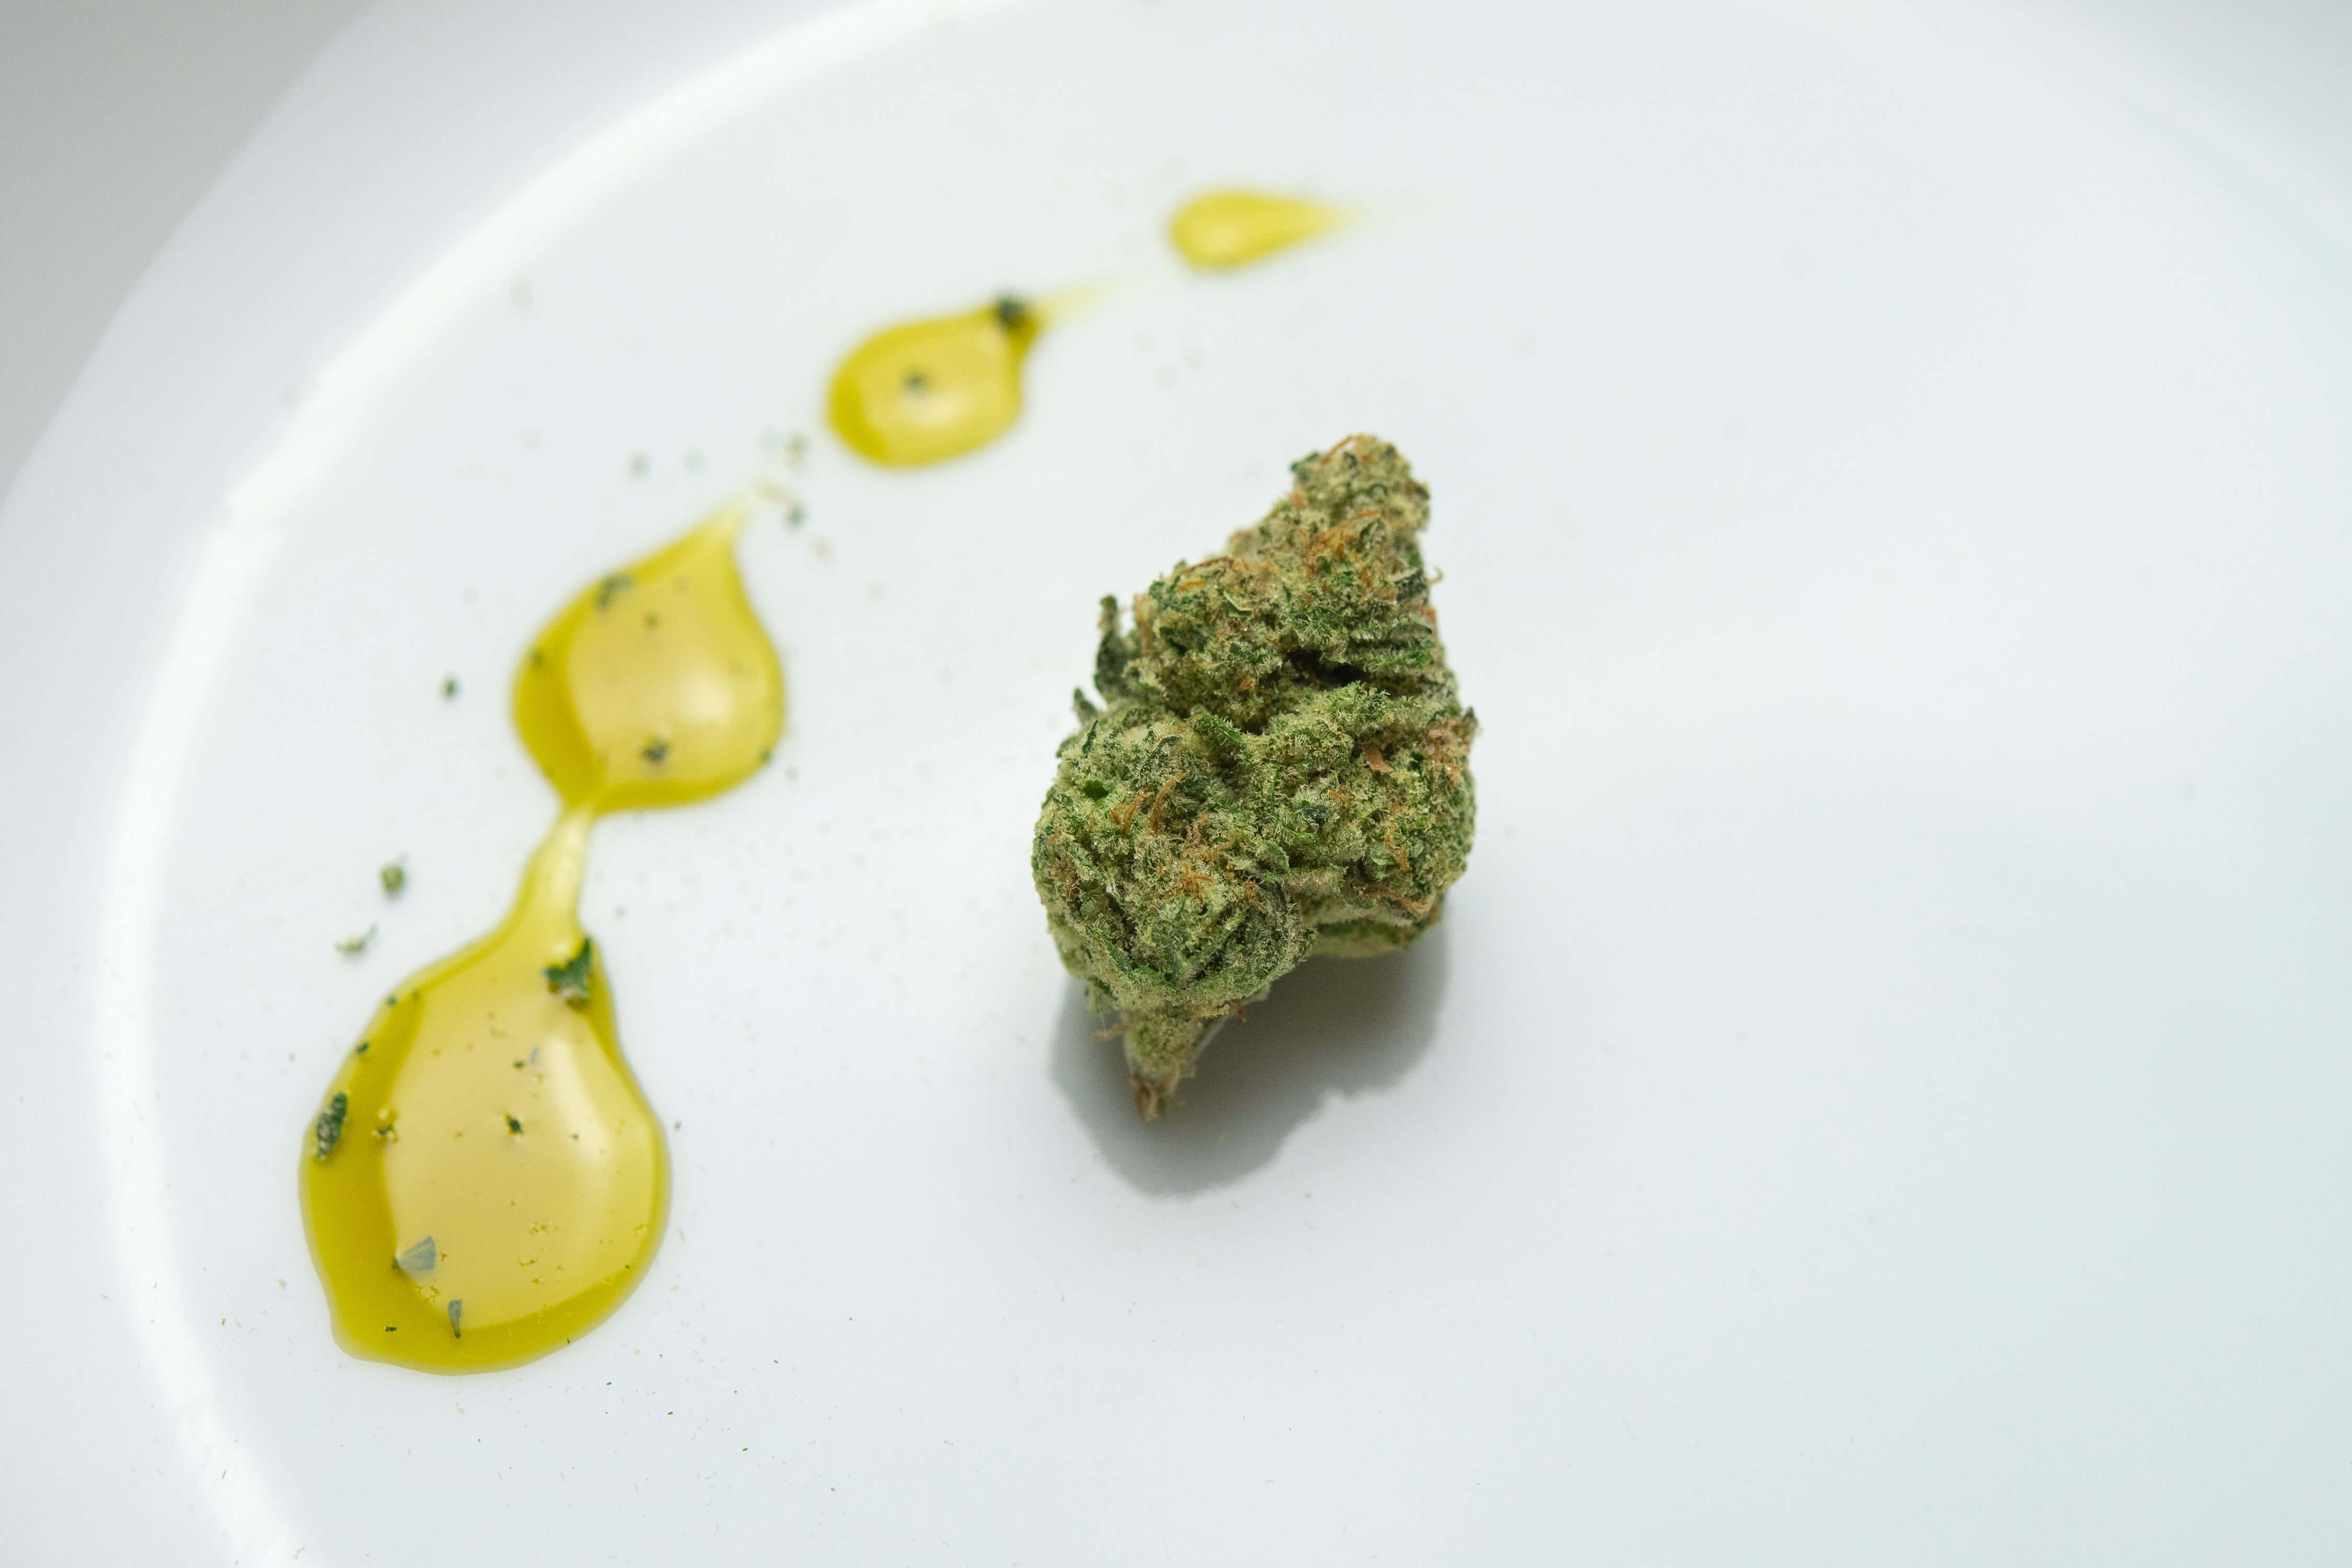 Marijuana Bud with CBD Oil